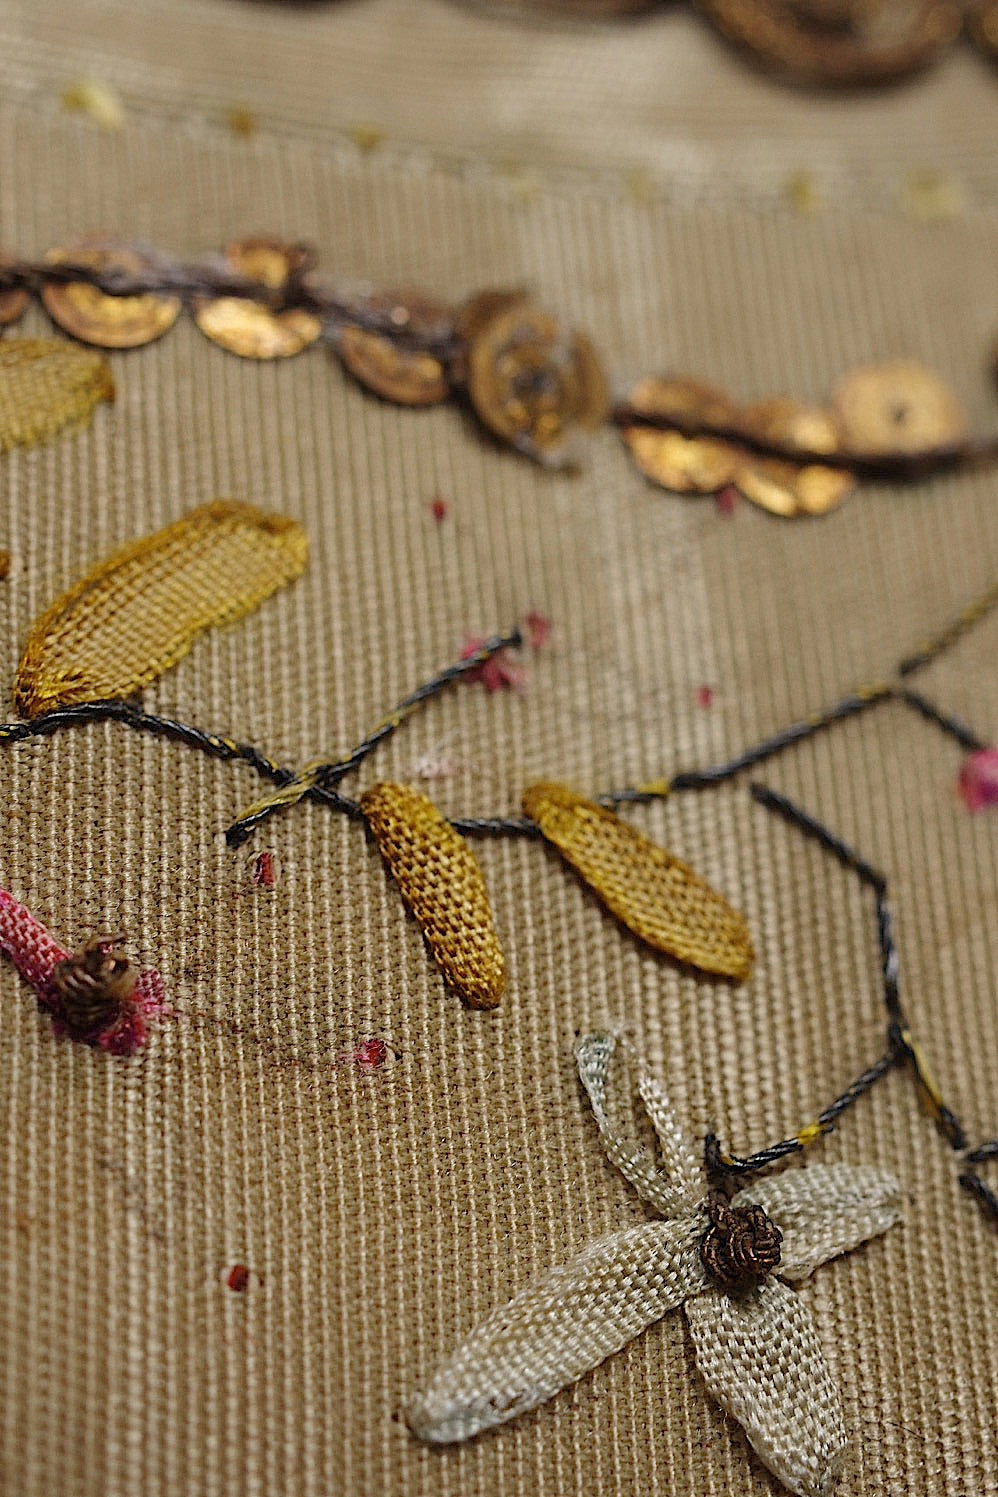 cadre antique antique embroidery frame 